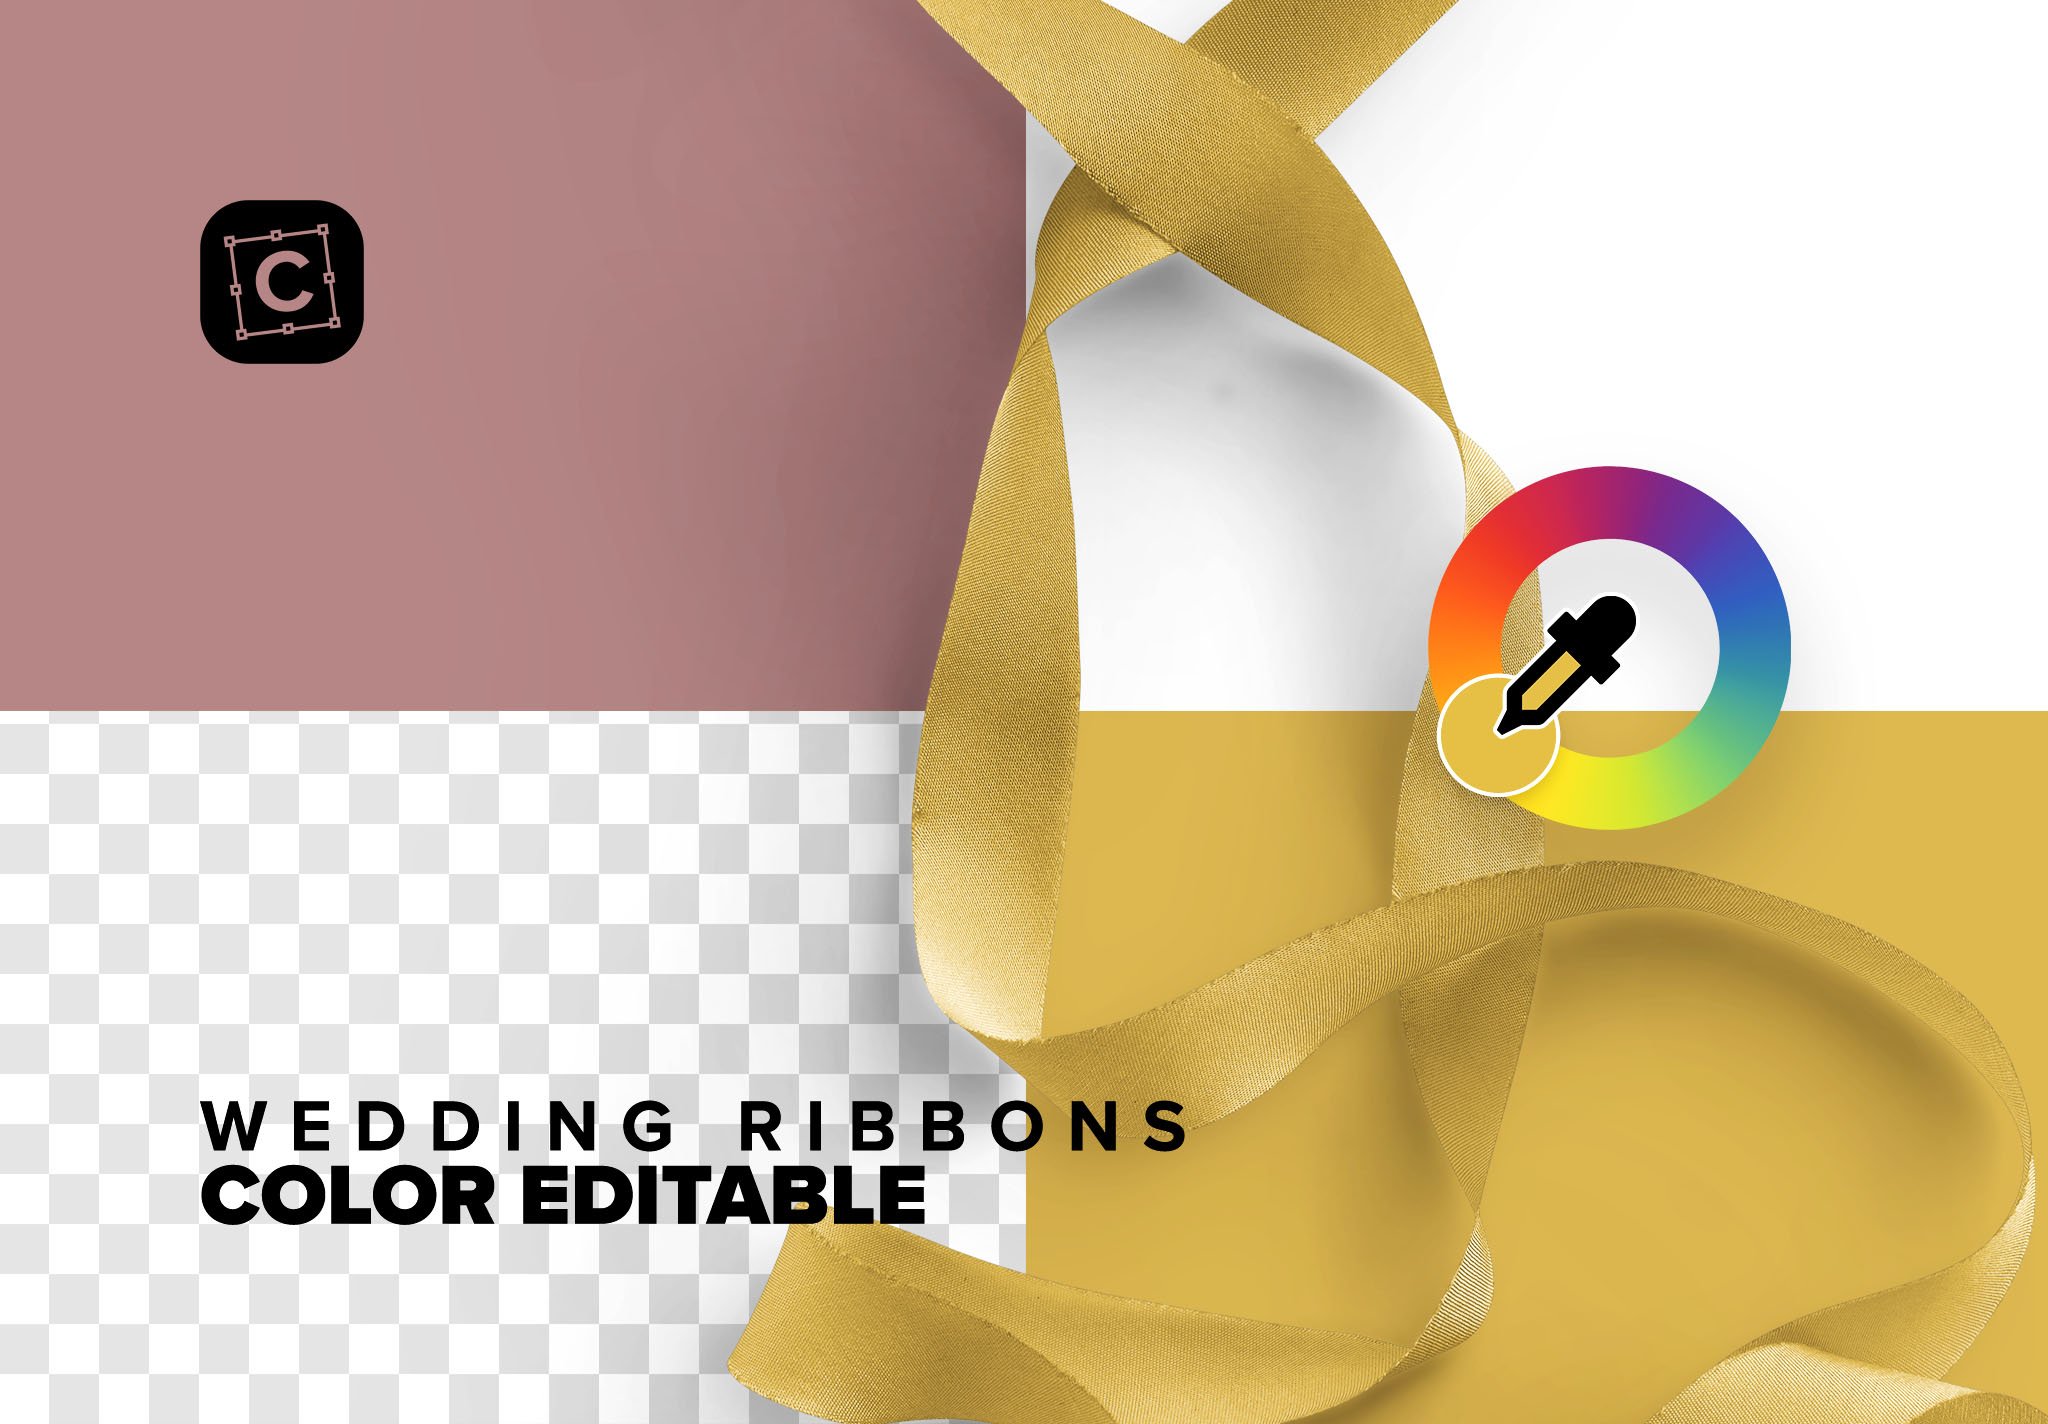 wedding ribbons 04 item scene creator 562